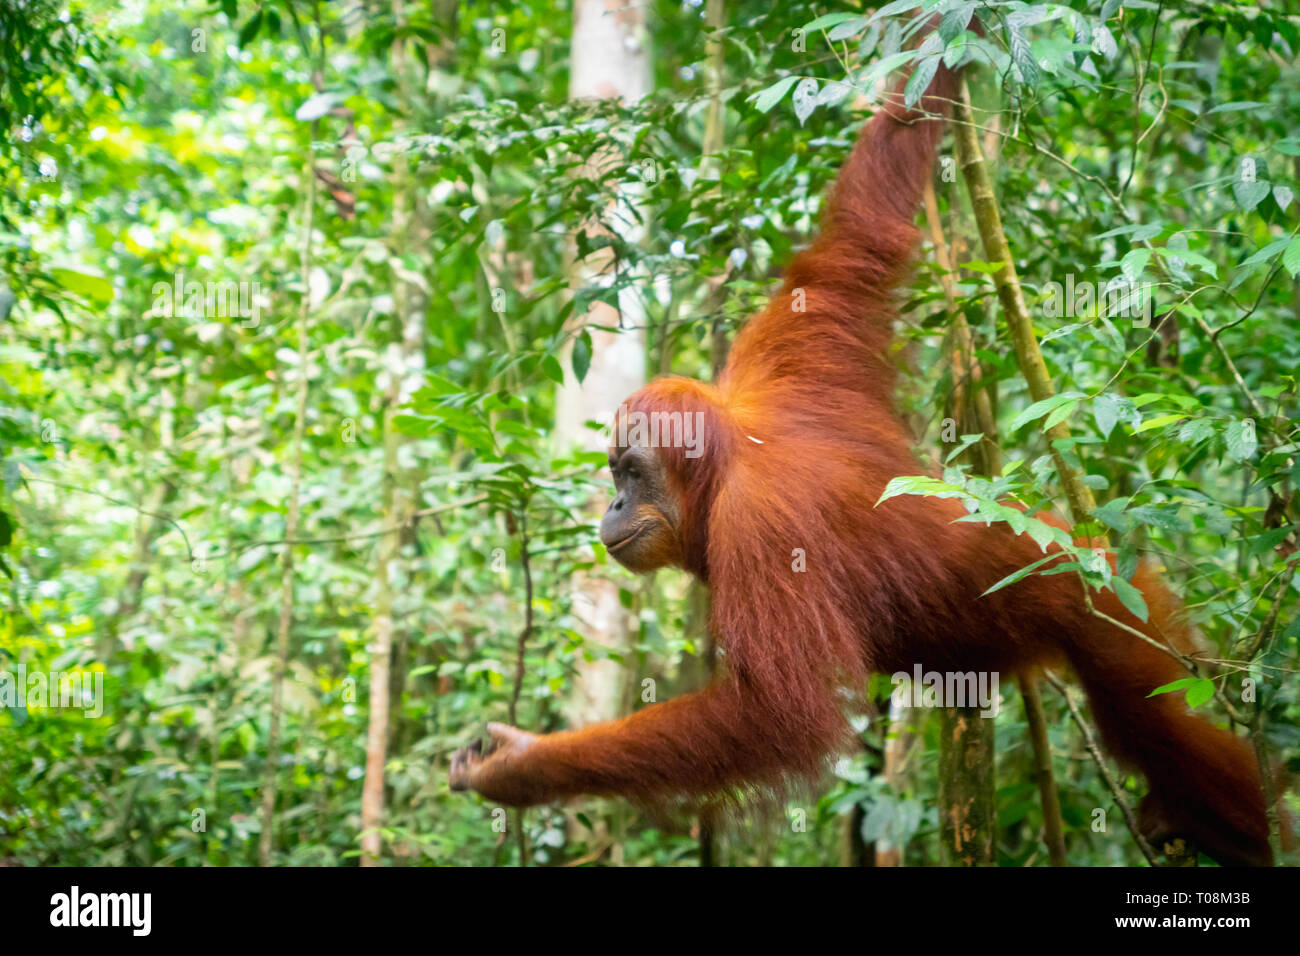 Orangutan giungla in verticale. Semi-wild orangutan femmina nella giungla foresta di pioggia del Bukit Lawang, nel nord di Sumatra, Indonesia. Foto Stock